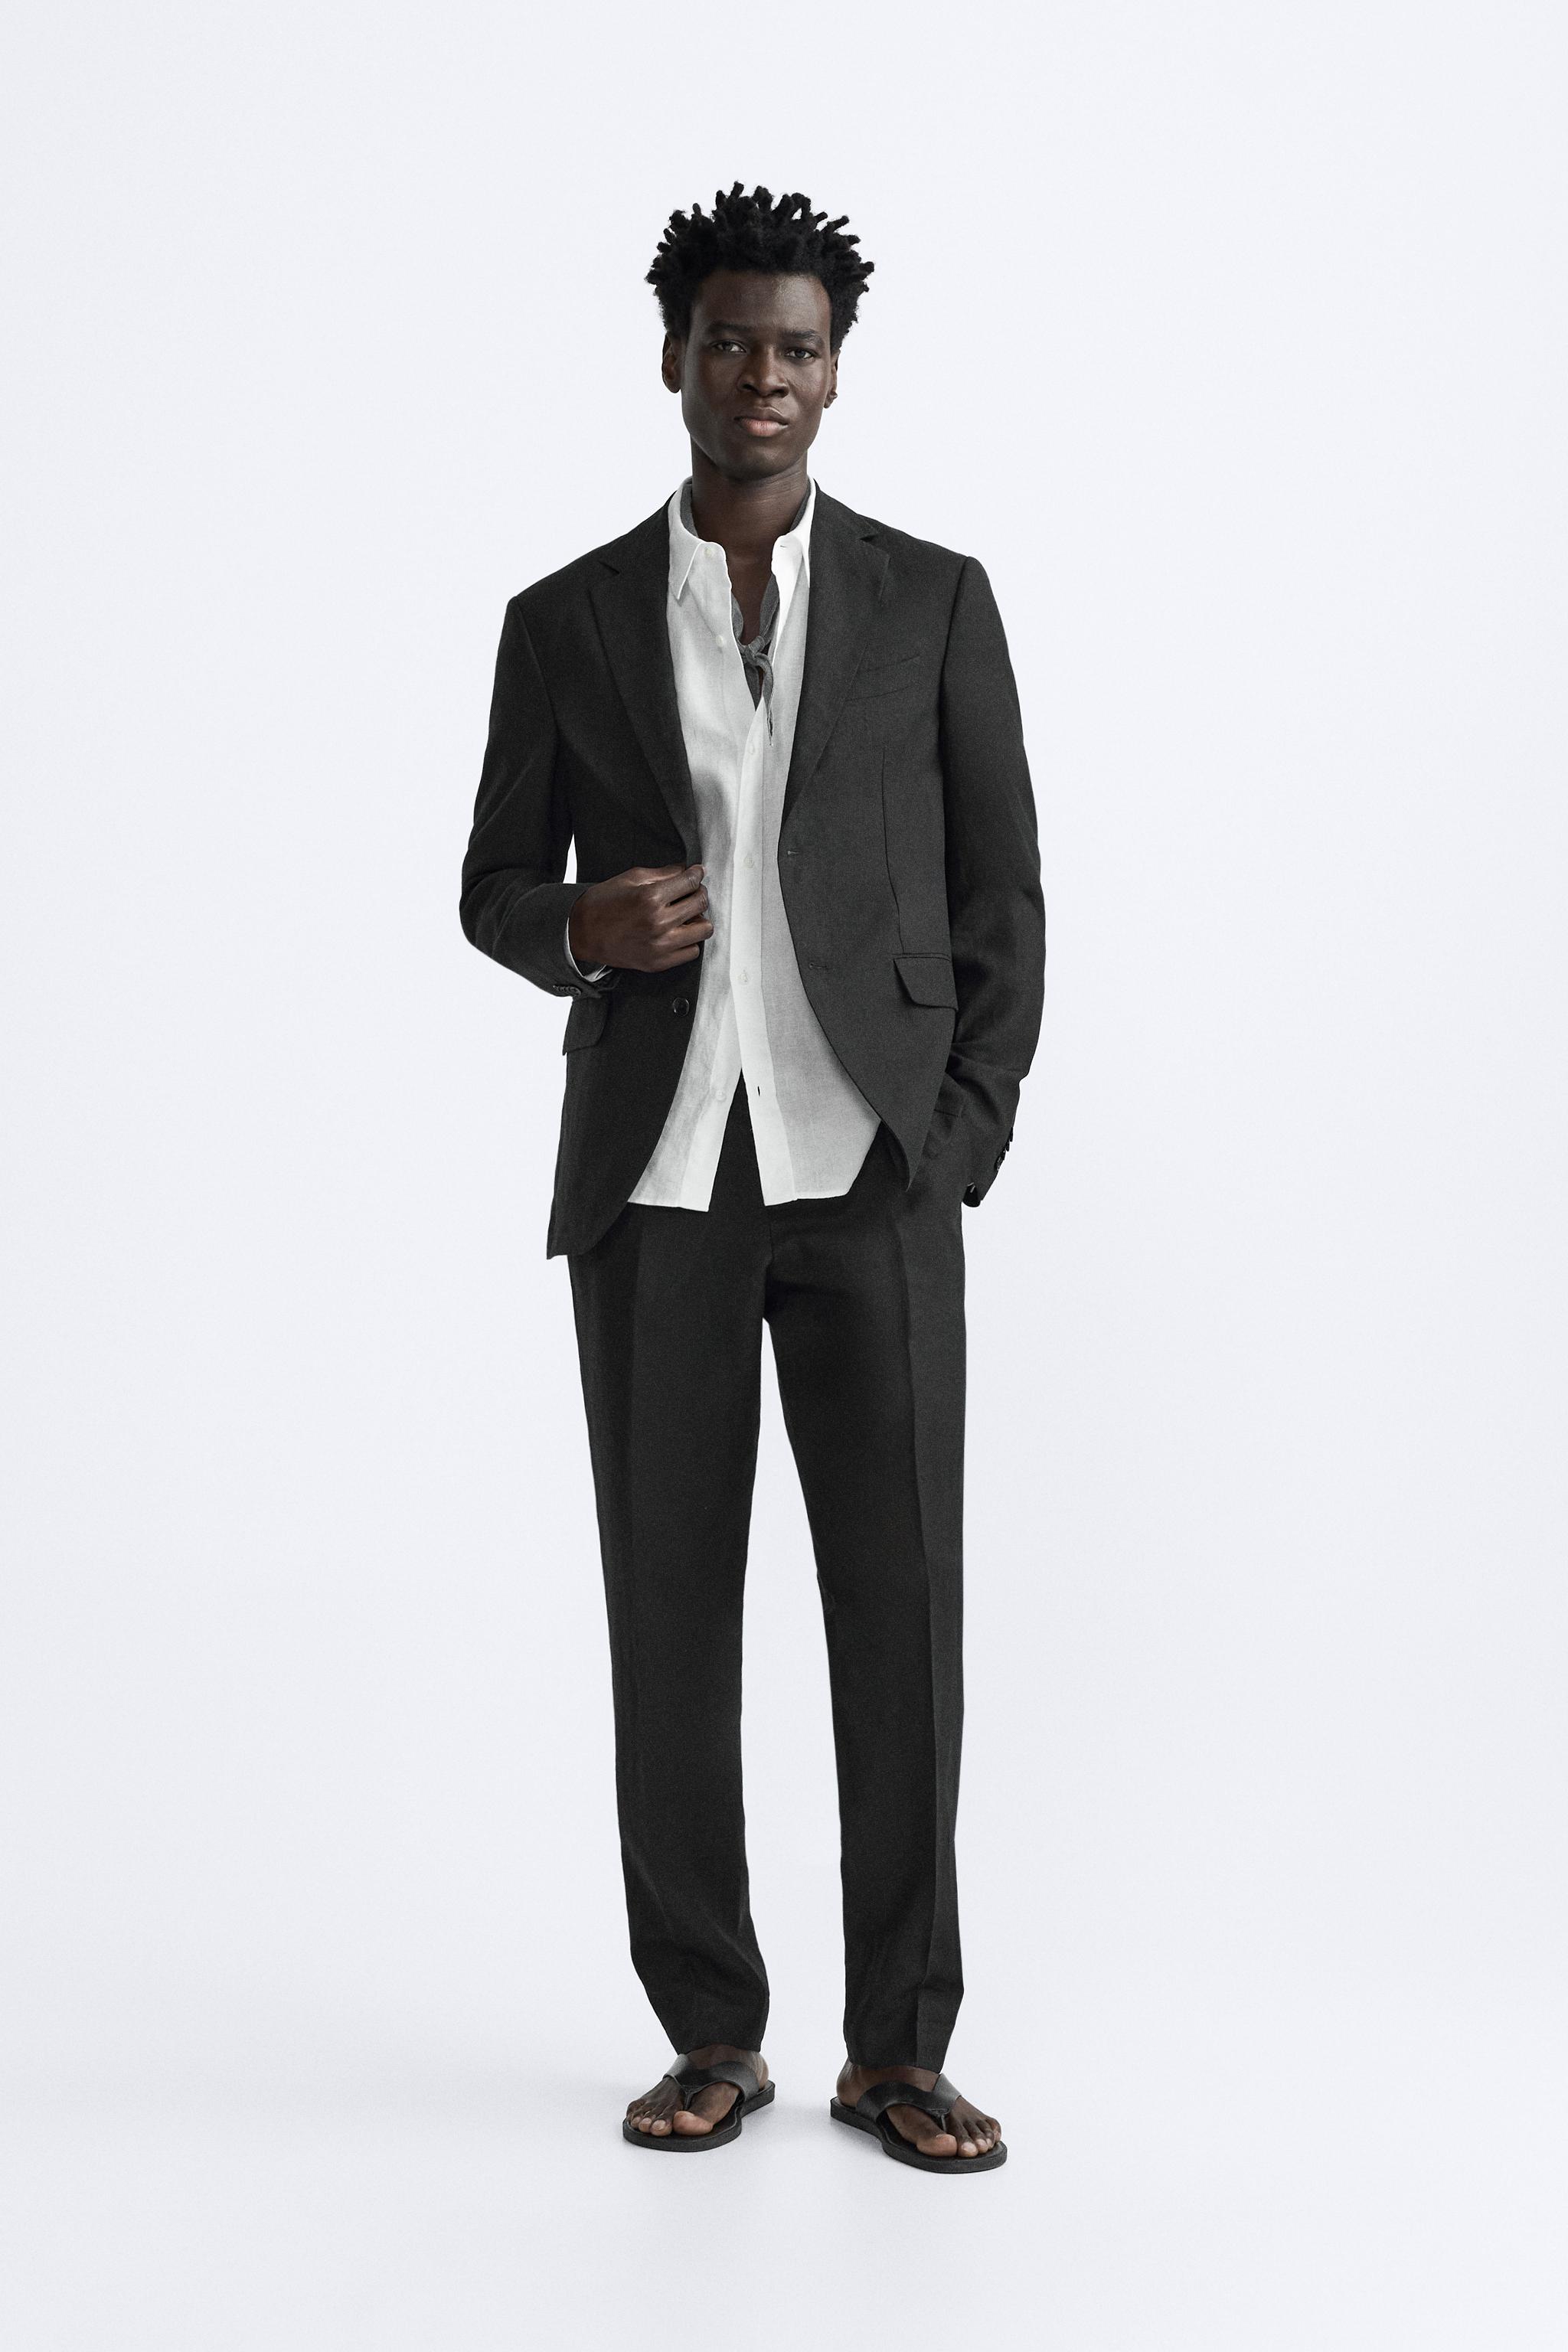 Men's Summer and Linen Suits, Explore our New Arrivals